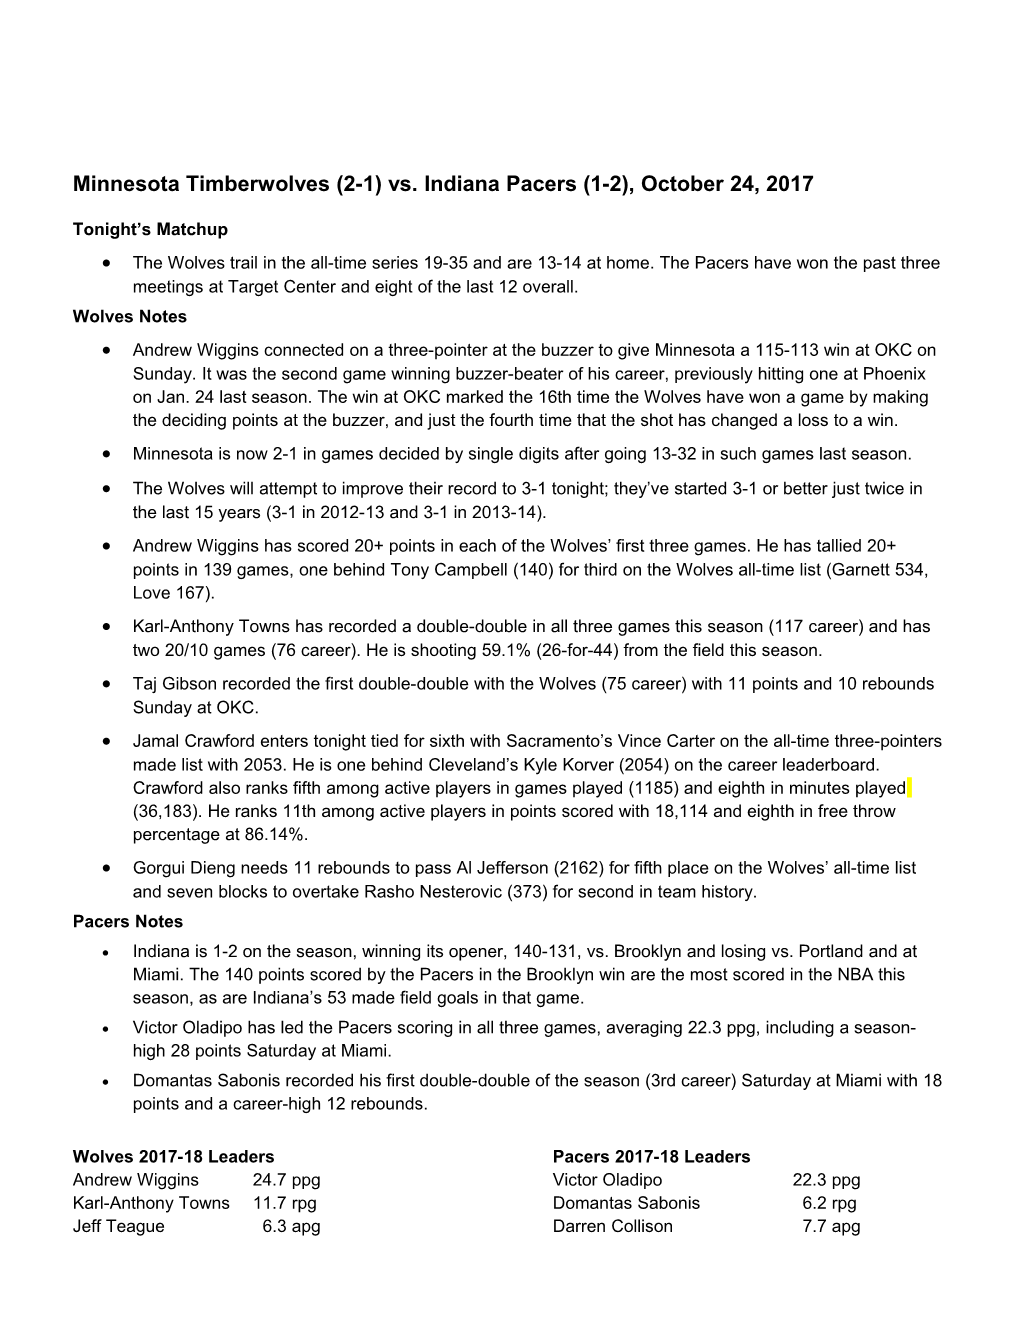 Minnesota Timberwolves (2-1)Vs. Indiana Pacers (1-2), October 24, 2017